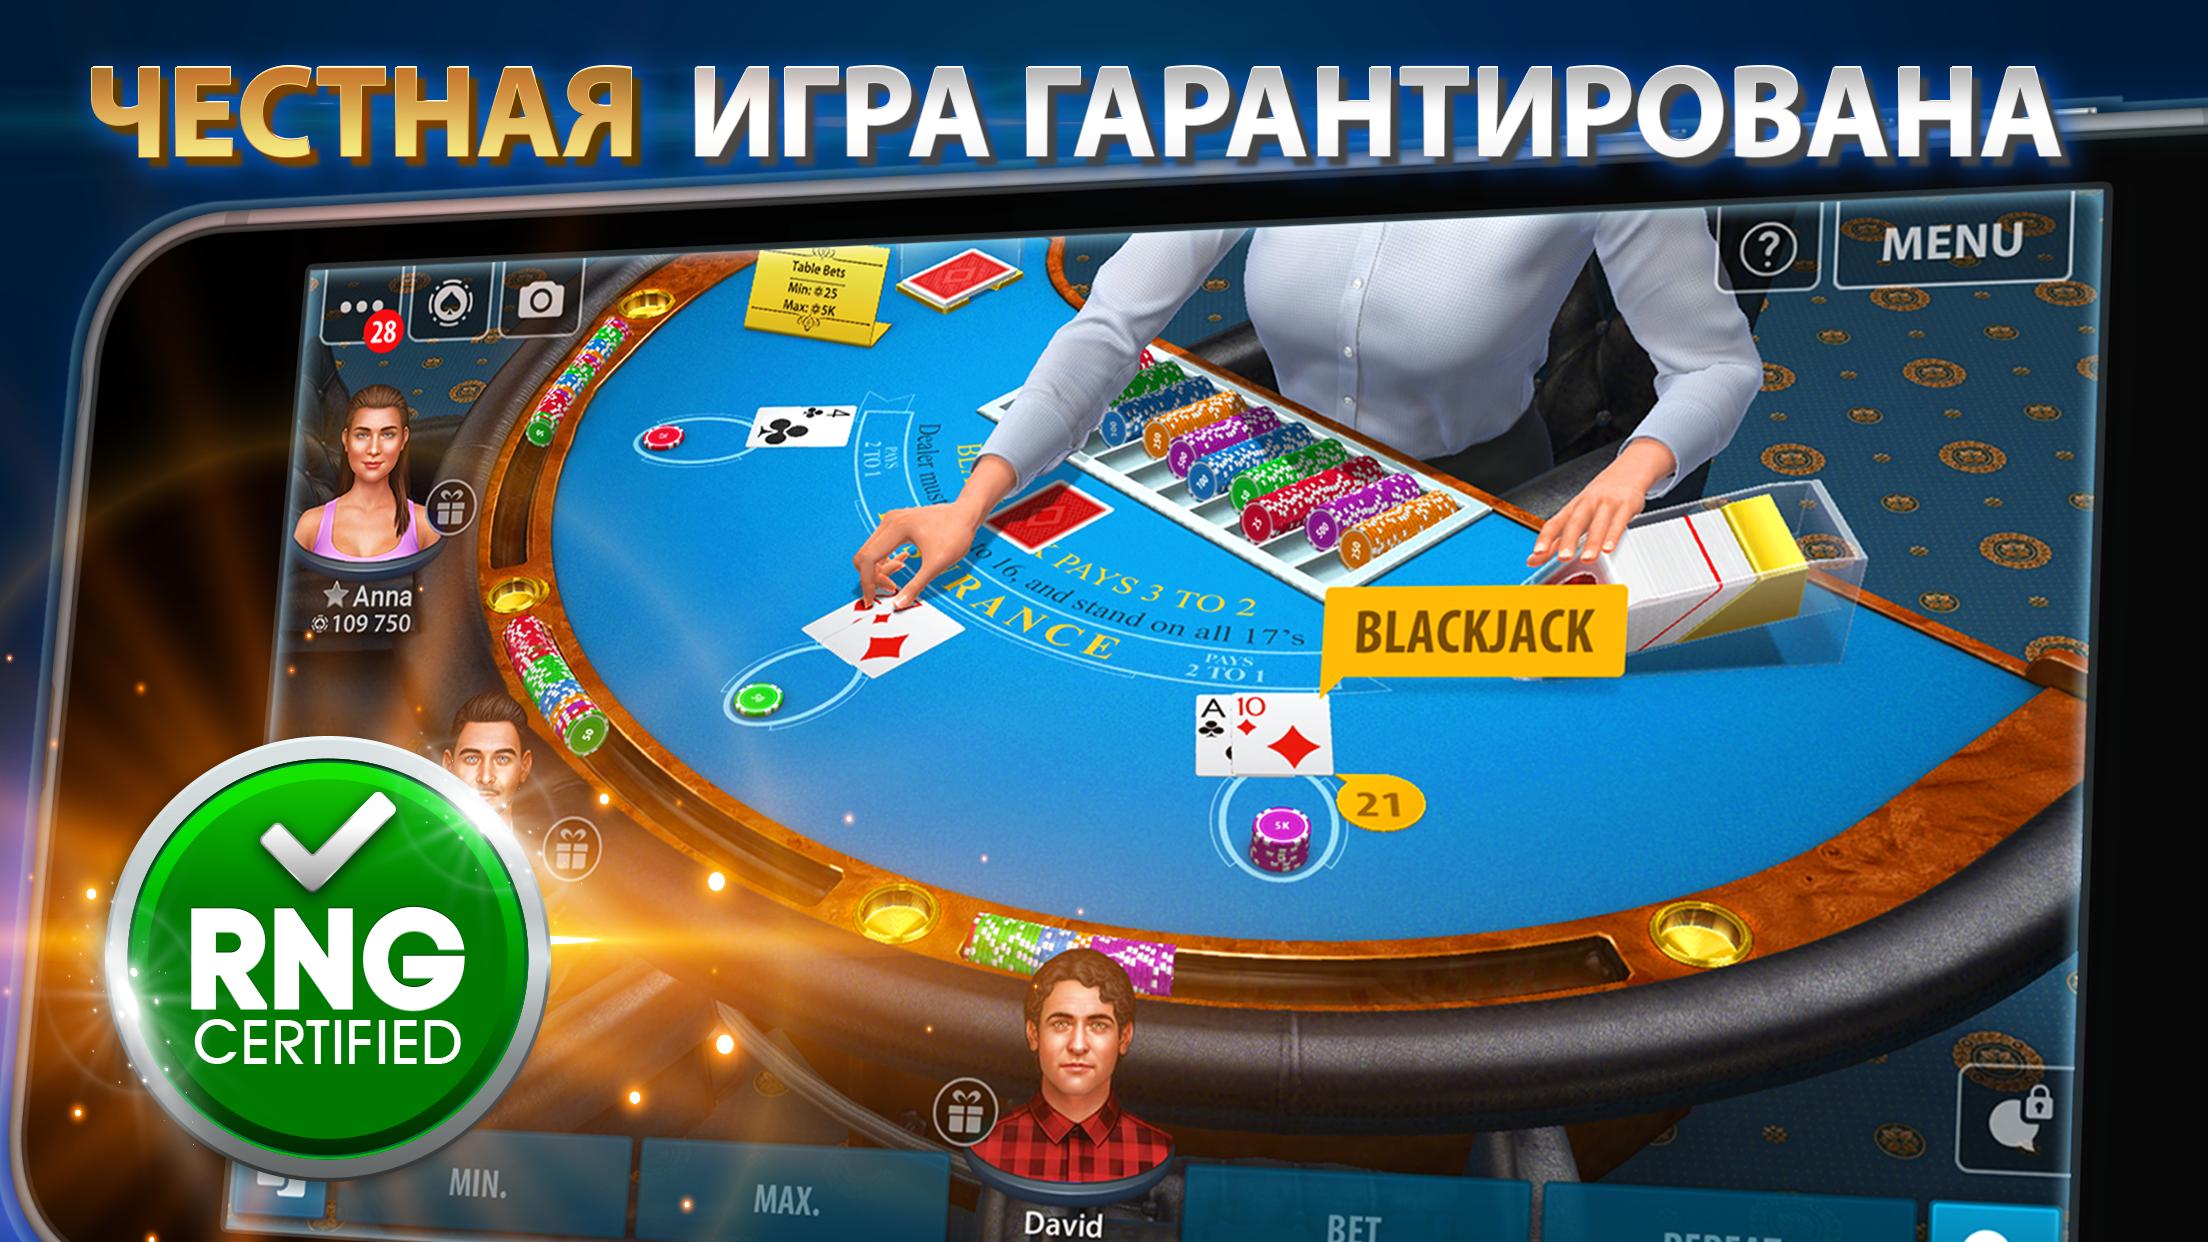 21 blackjack online casino foros мостбет пополнить